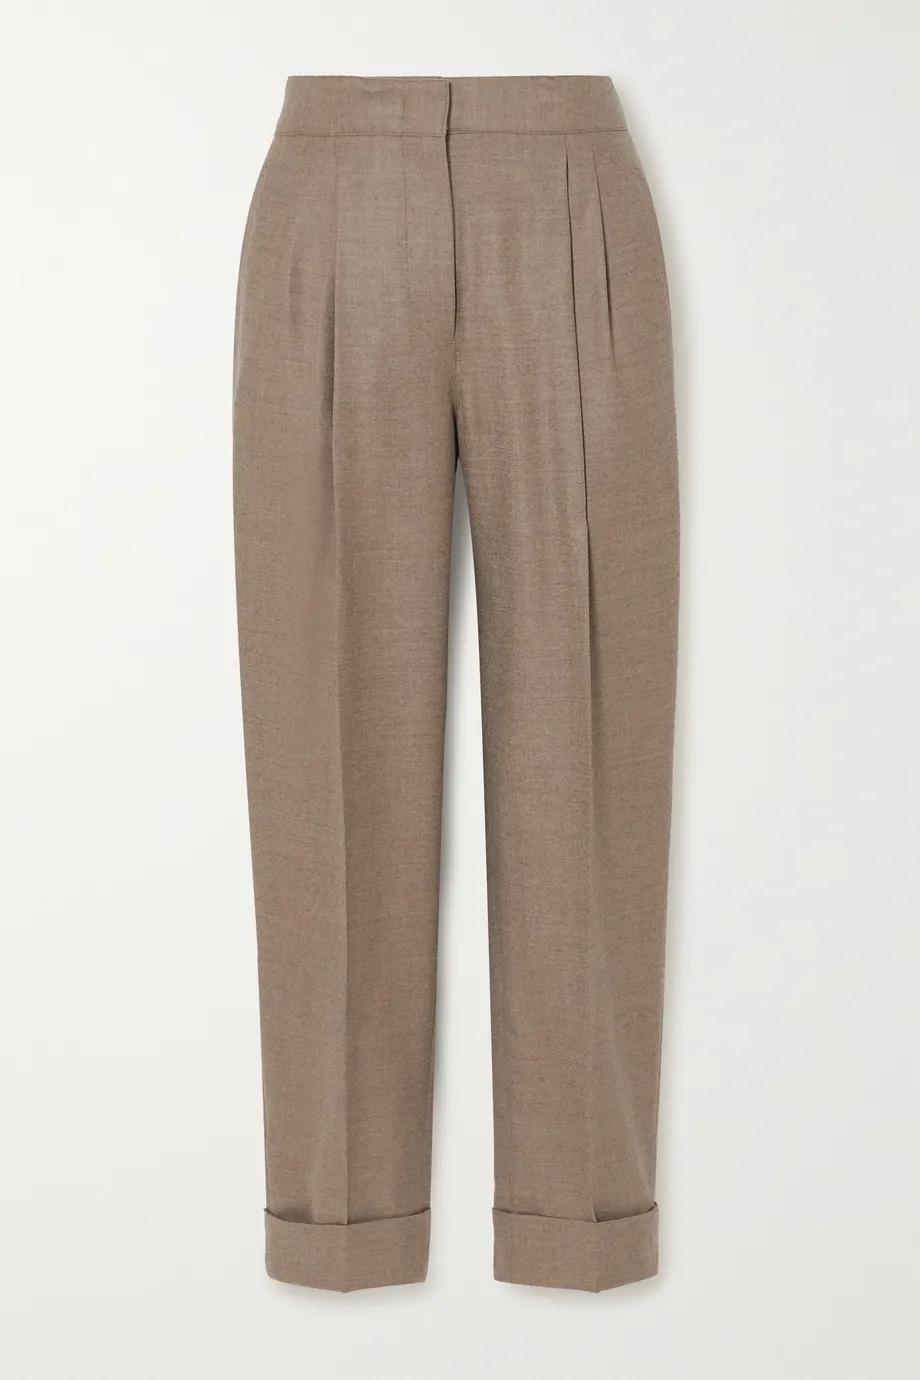 + NET SUSTAIN Leblon wool and silk-blend straight-leg pants by CASASOLA